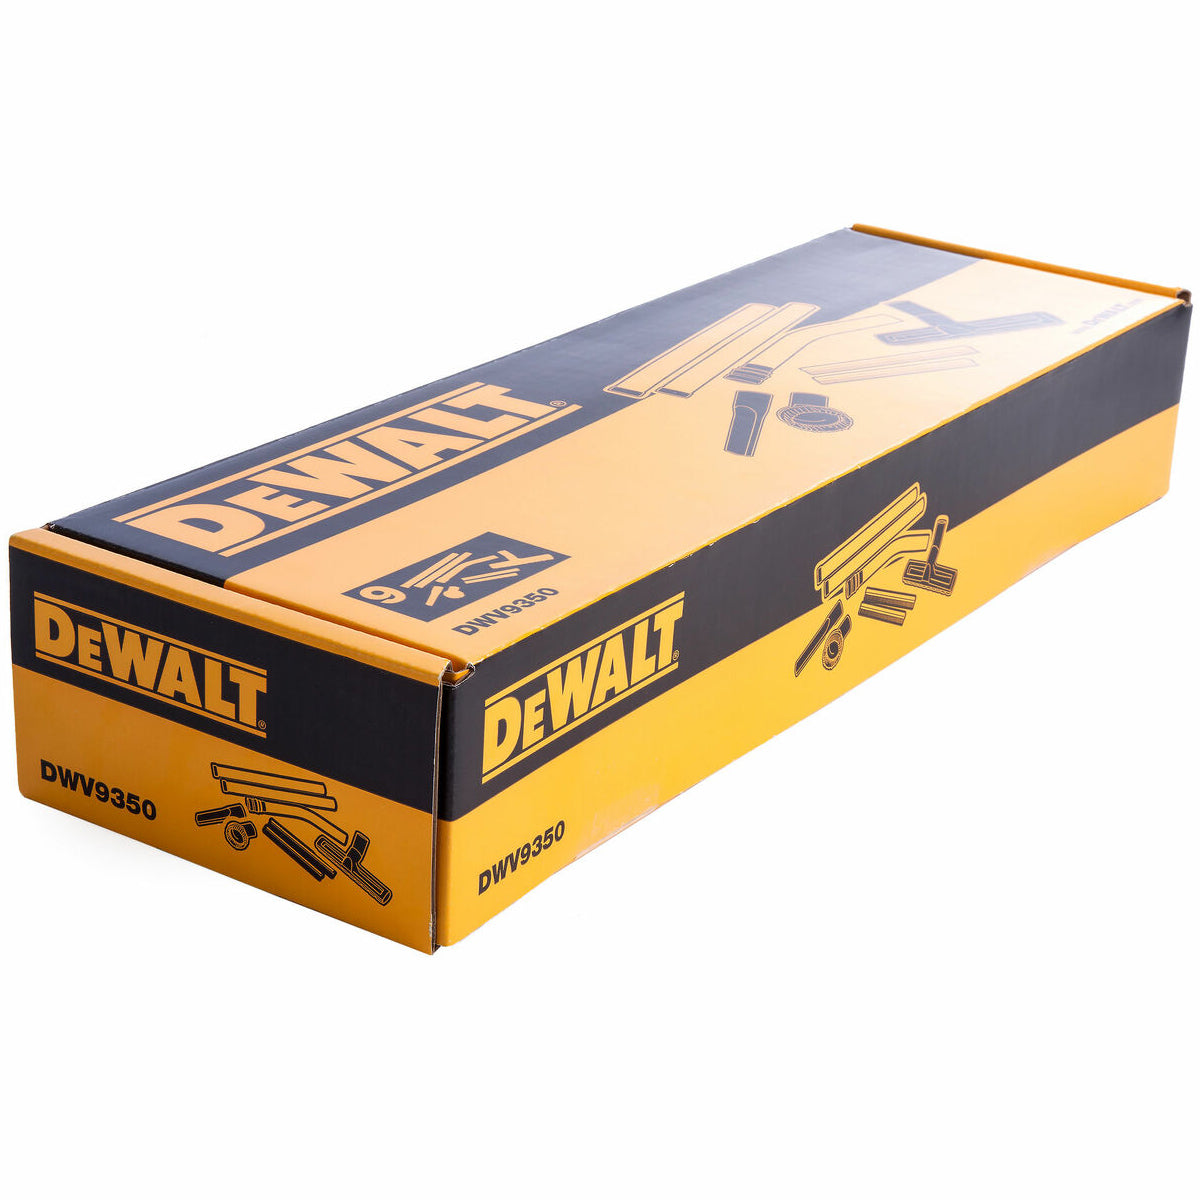 Dewalt DWV9350 Dust Extractor Flooring Cleaning Kit